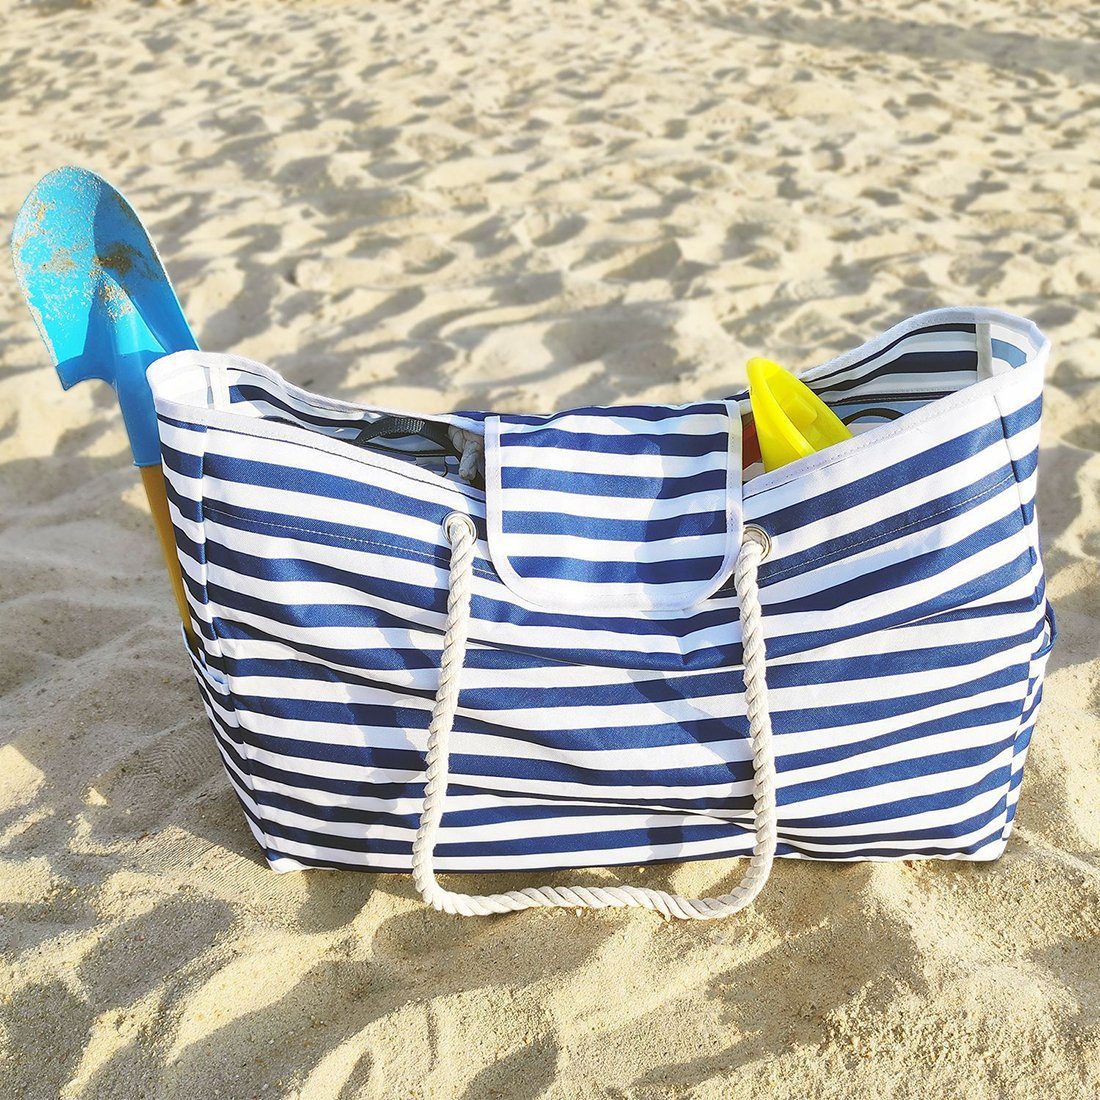 Haiaveng Strandtasche Strandtasche, Badetasche,Grosse Streifen Strandtasche black Strandtasche,Wasserdicht